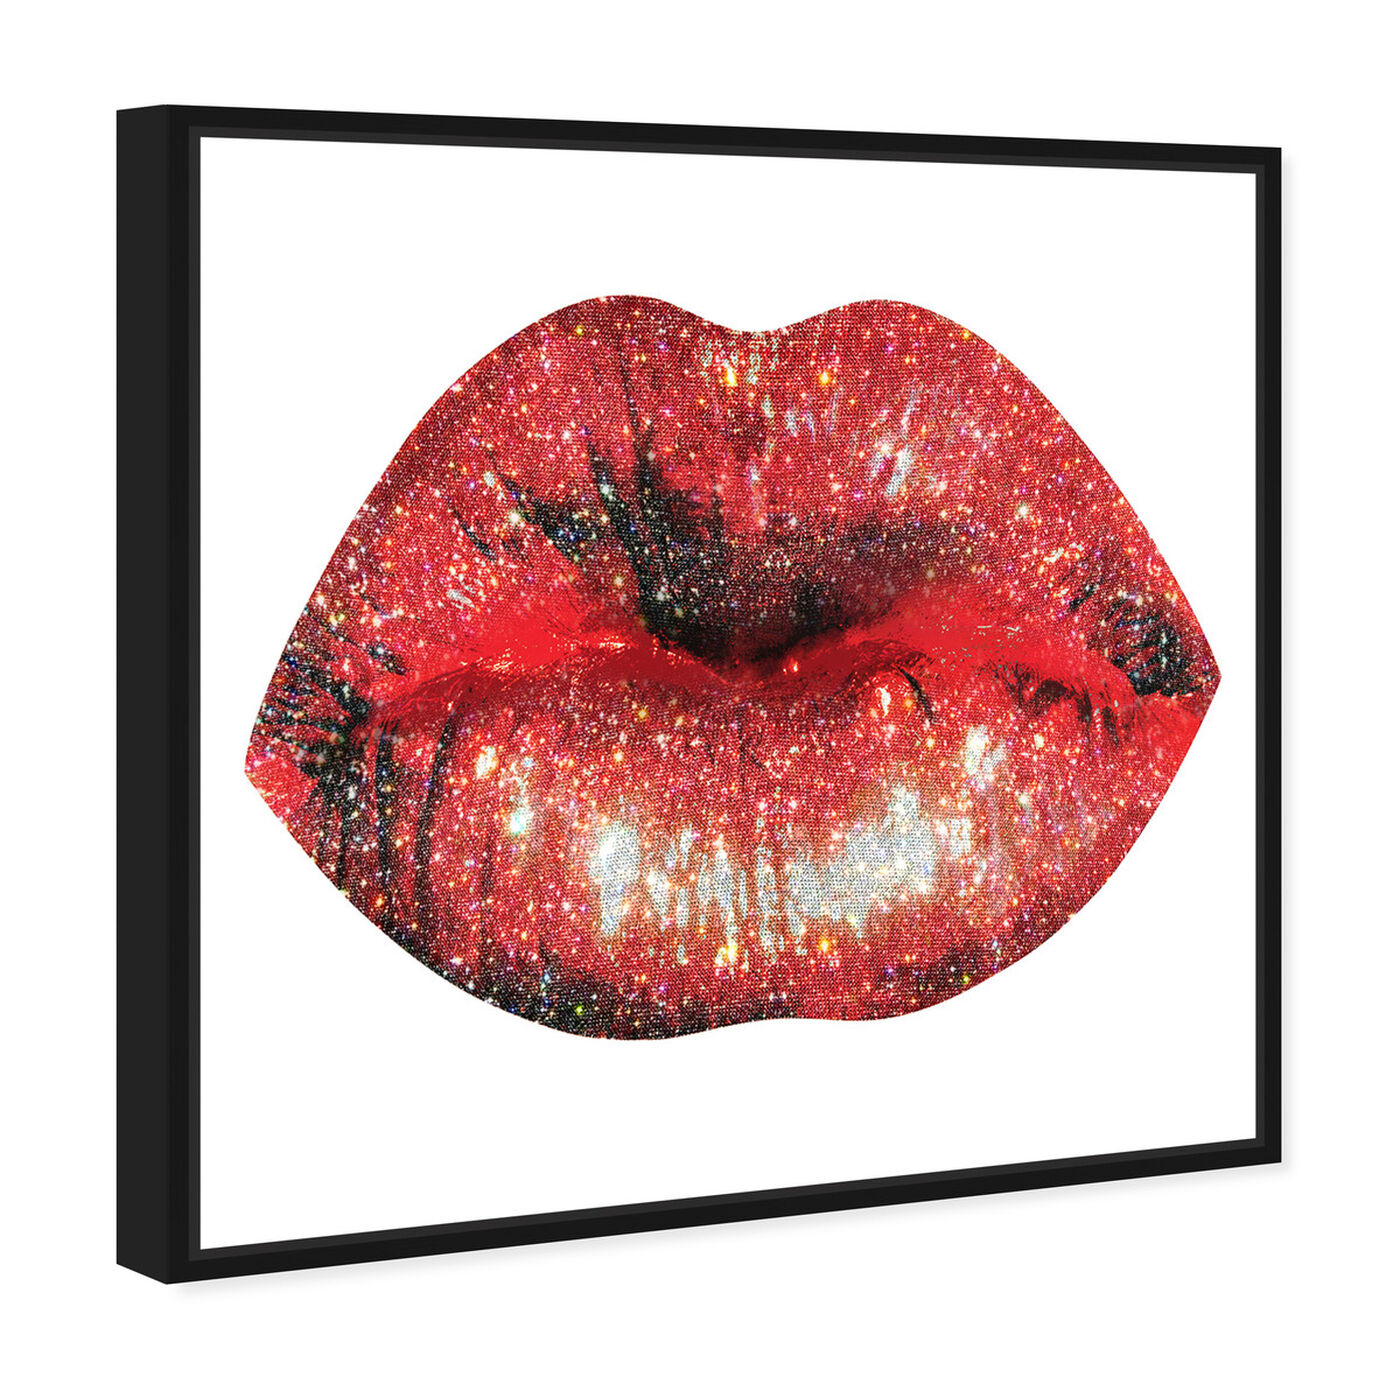 Media Art louis Vuitton Lips Diamond Crush Framed sparkle Art 60cm x 60cm